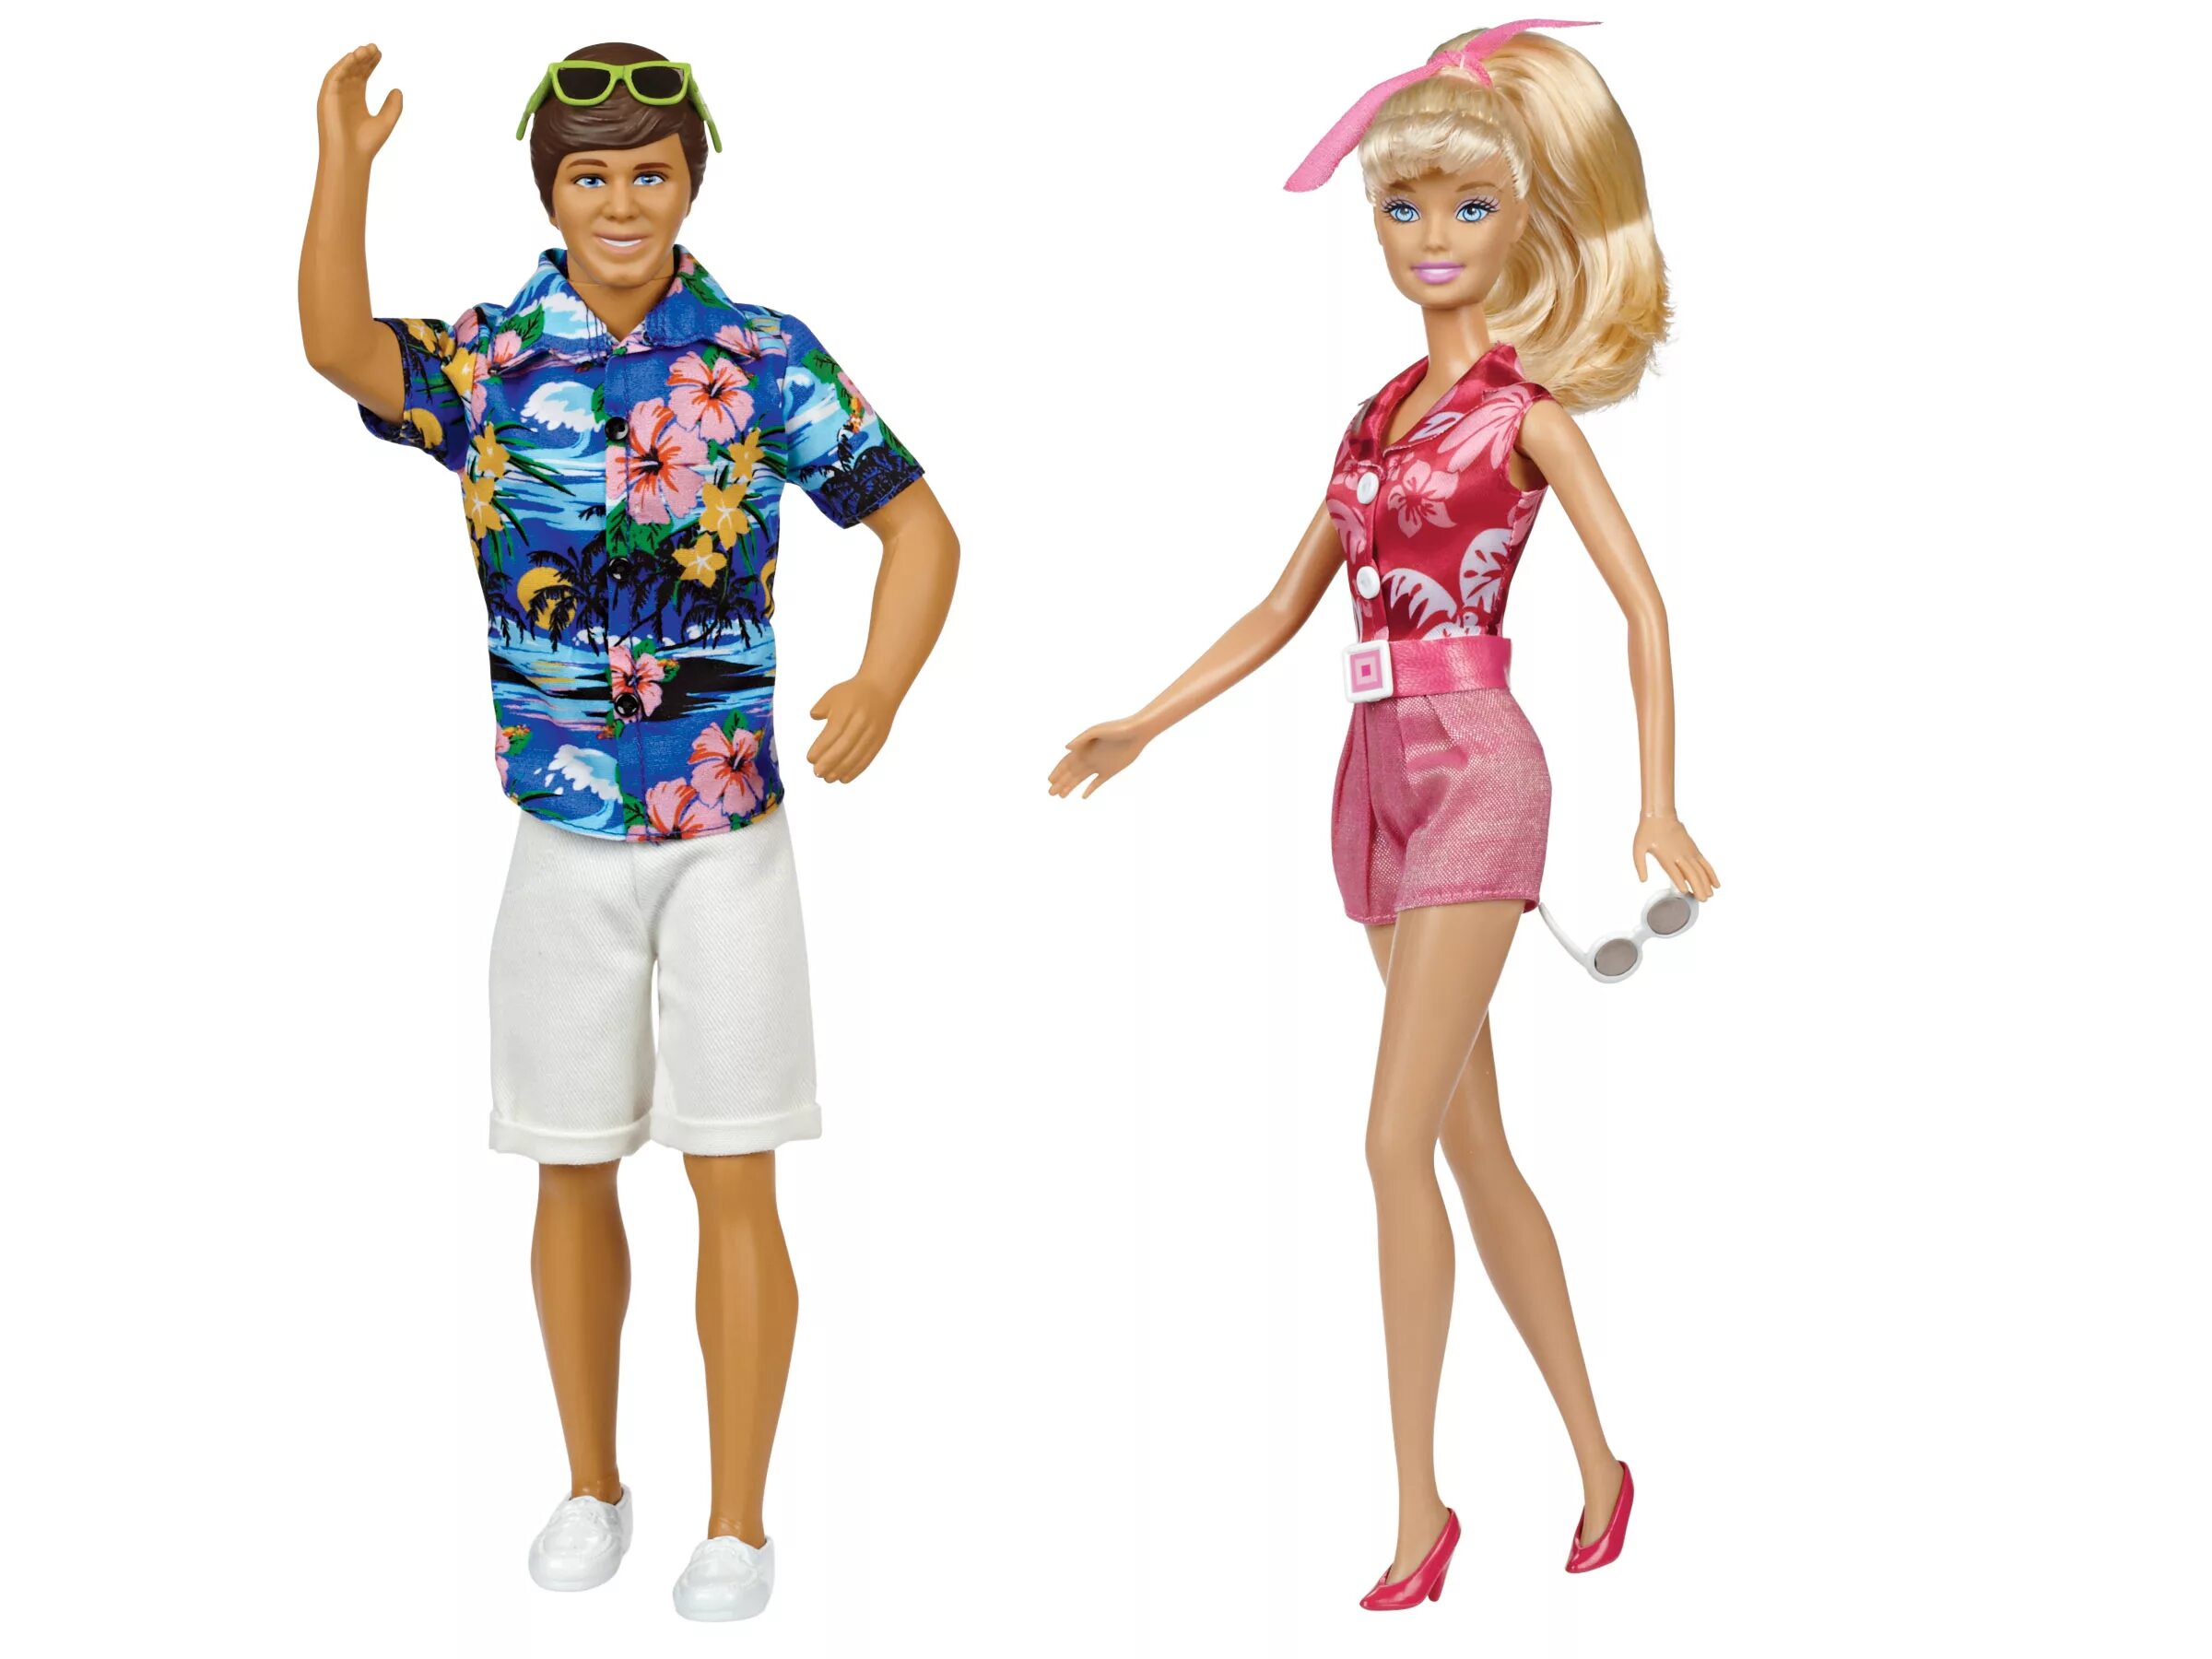 Танец барби и кена. Куклы Барби и Кен. История игрушек Барби и Кен. Барби кукла и Кен кукла. Кен и Барби Toy story.